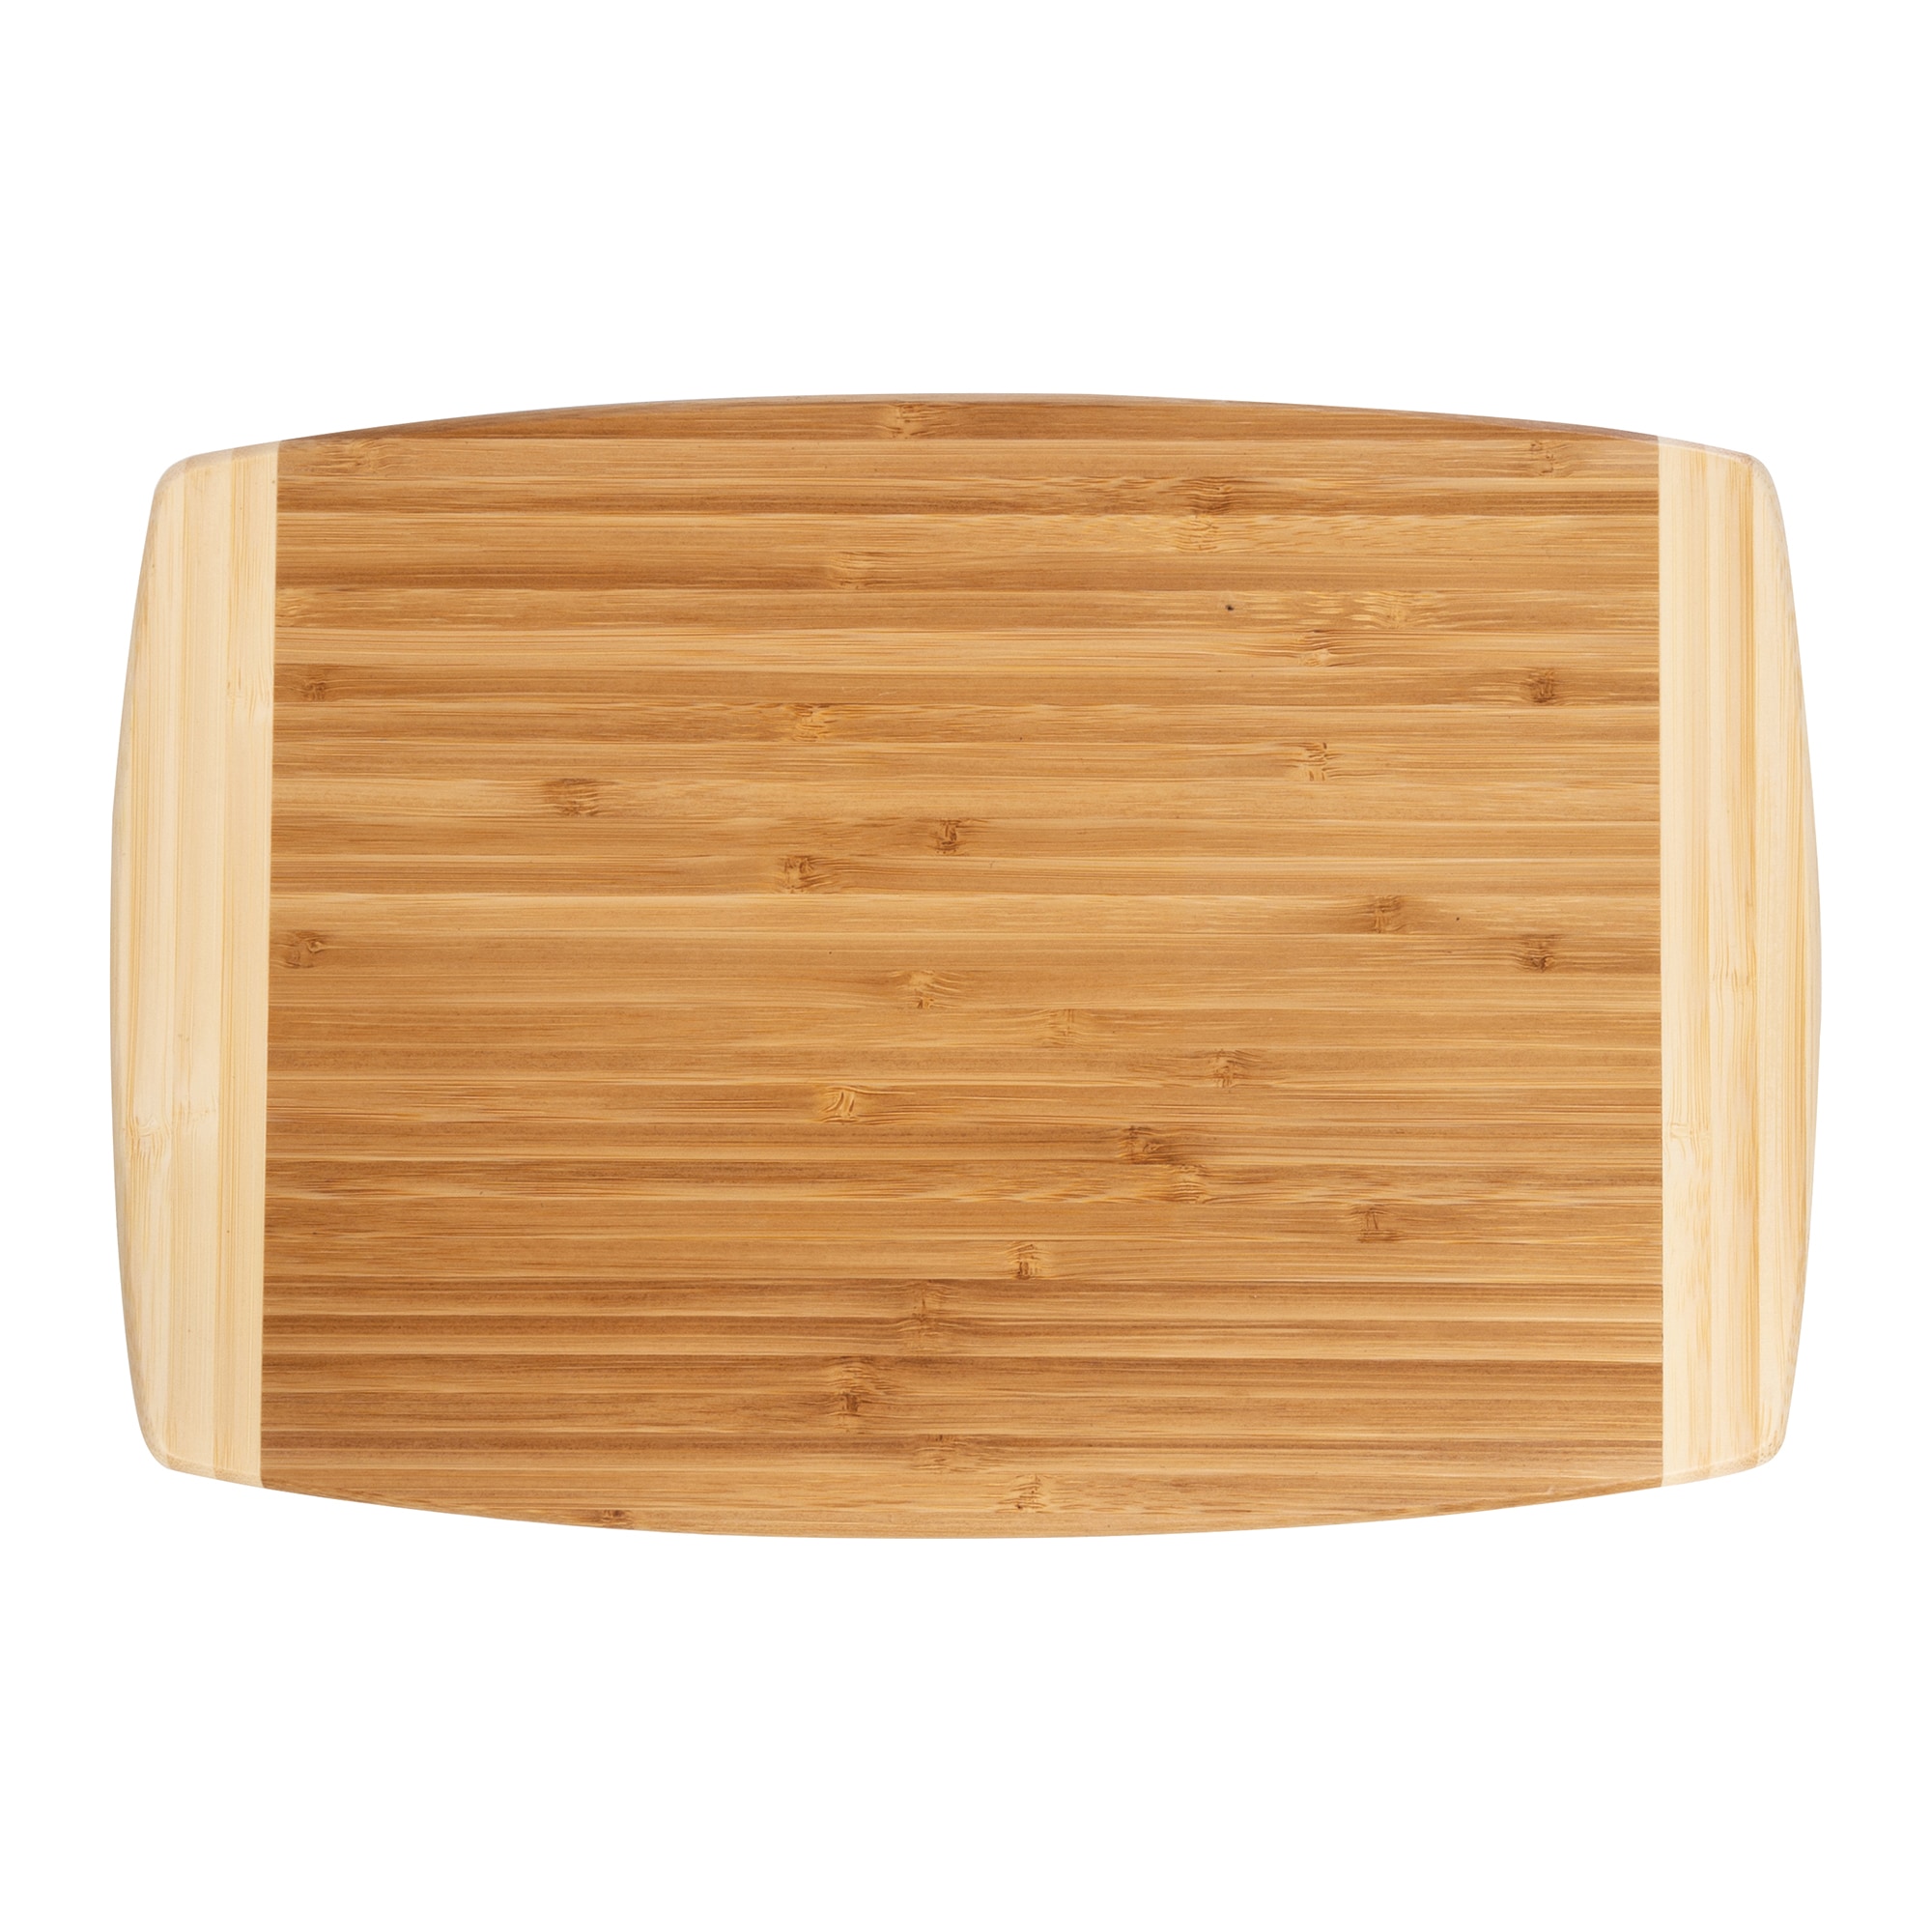 Mr. Good Looking is Cookin KitchenAid 8 x 10 Natural Rubberwood Cutting  Board